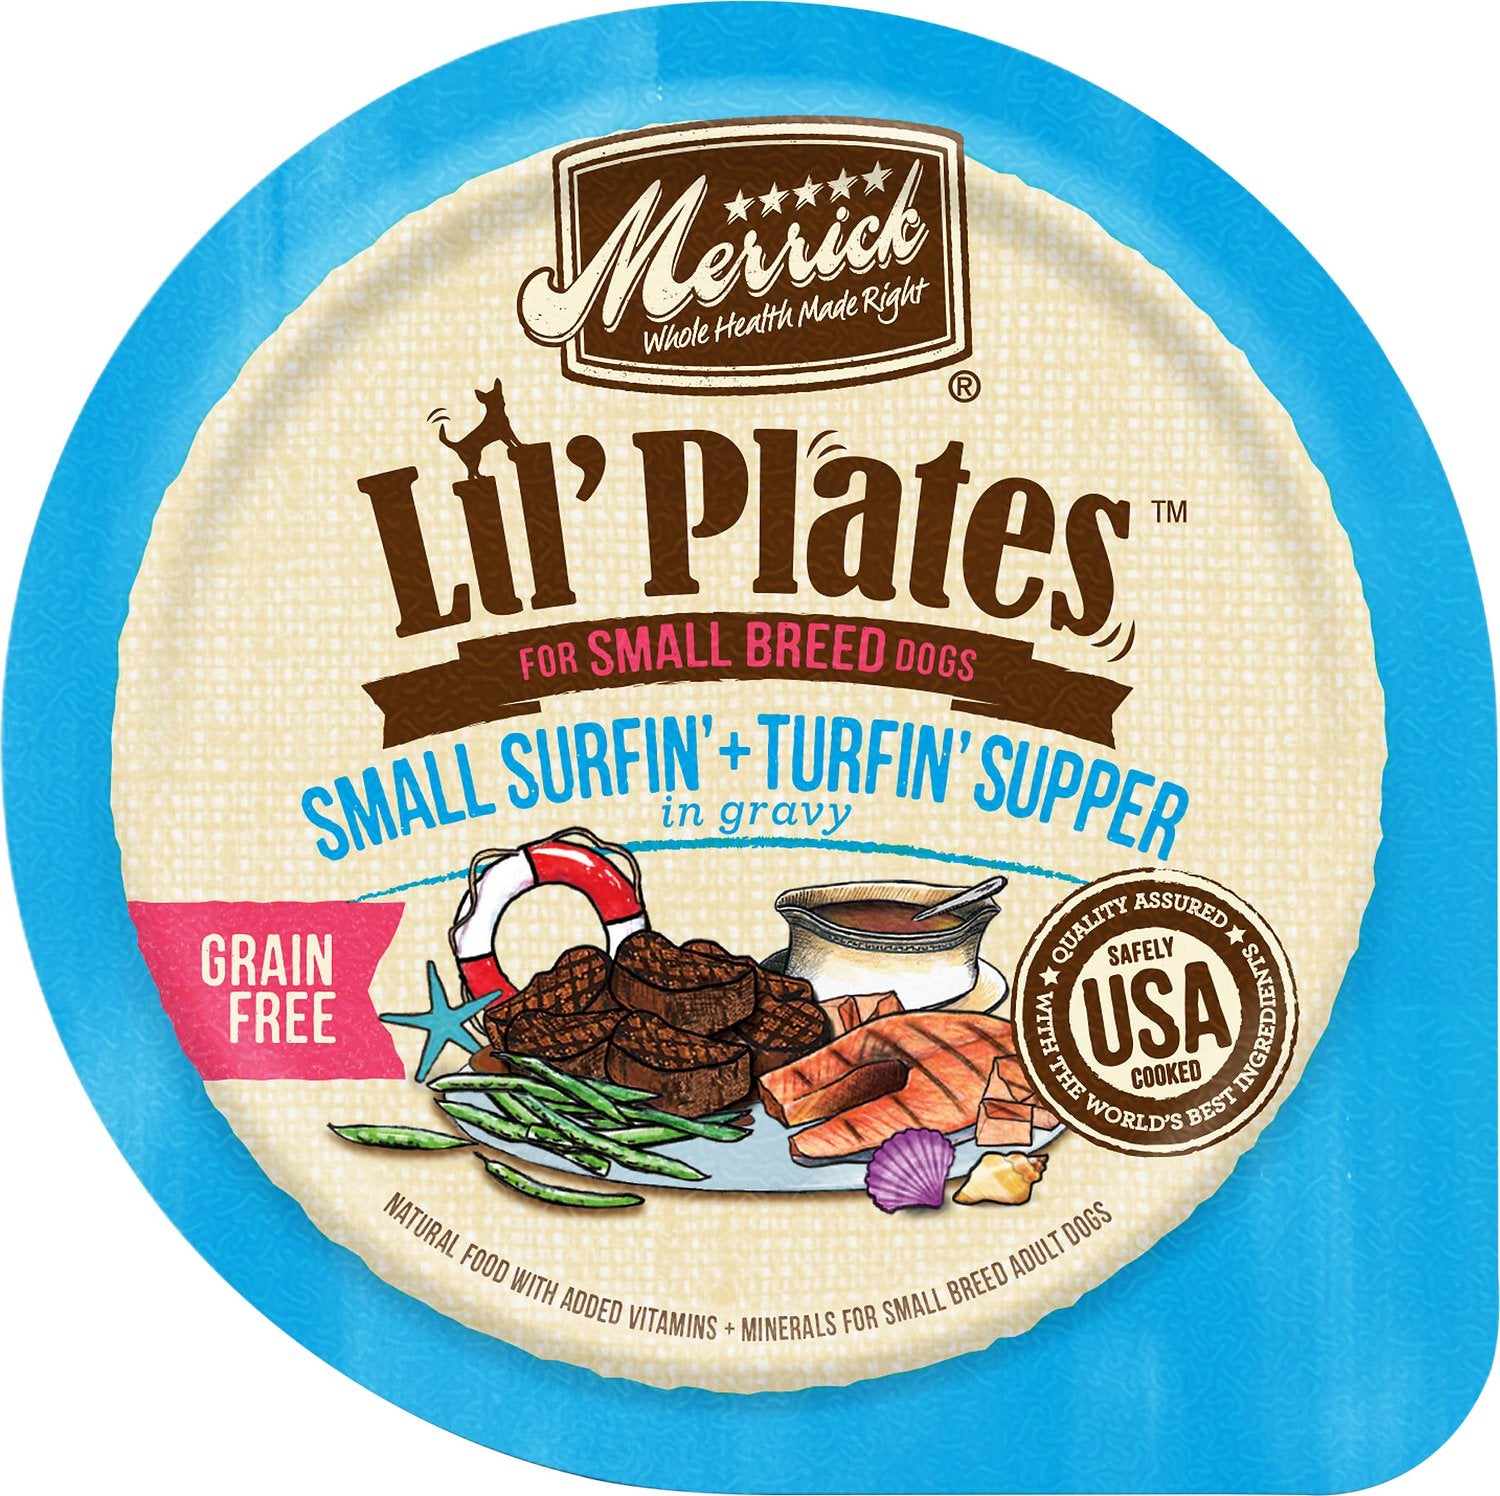 Merrick Lil' Plates Grain Free Small Surin' + Turfin' Supper in Gravy (Wet Dog Food)